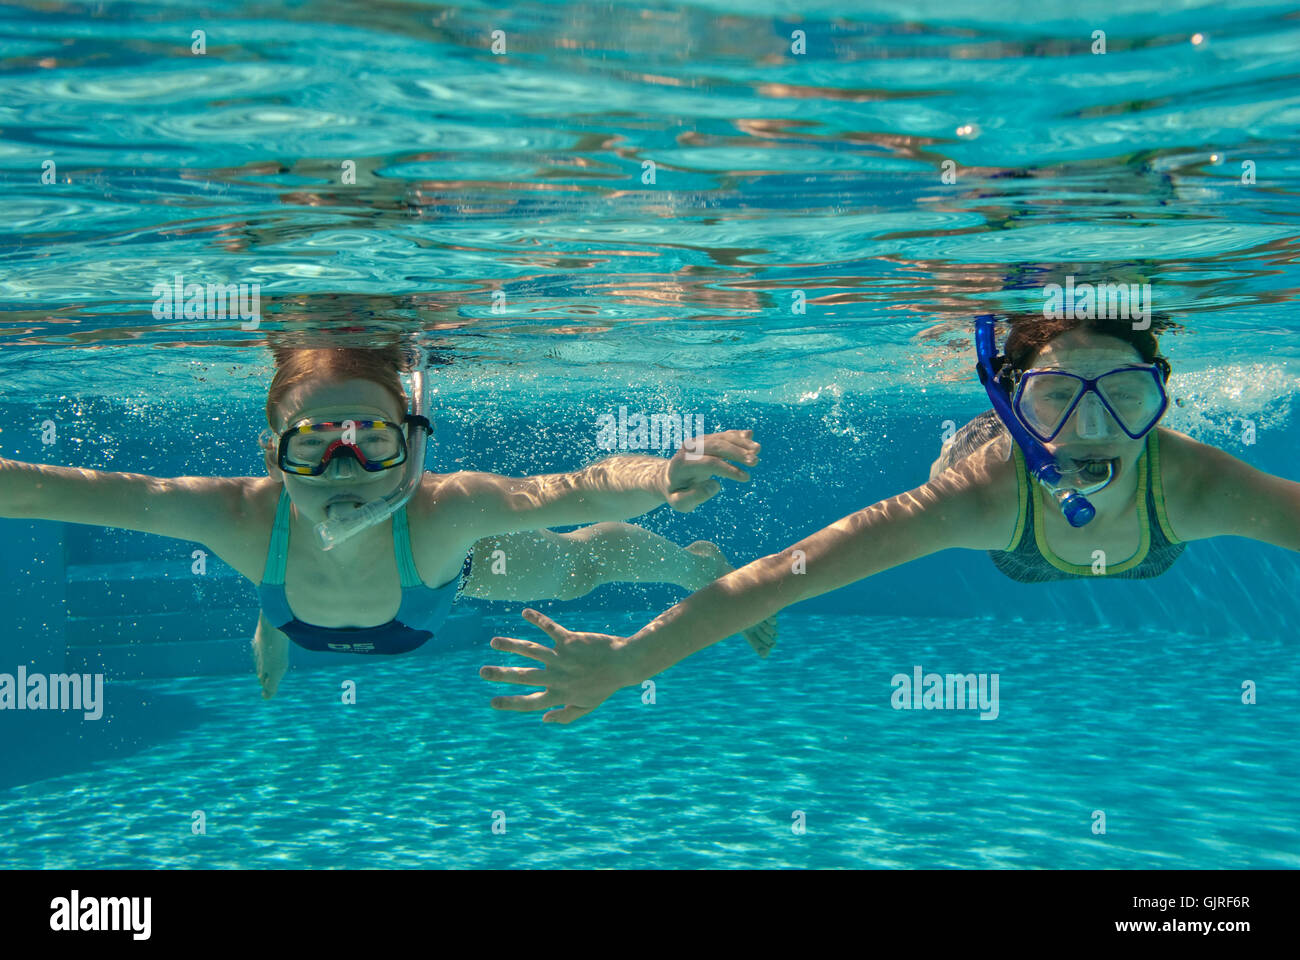 Girl Snorkeling In The Pool Stock Photo Alamy